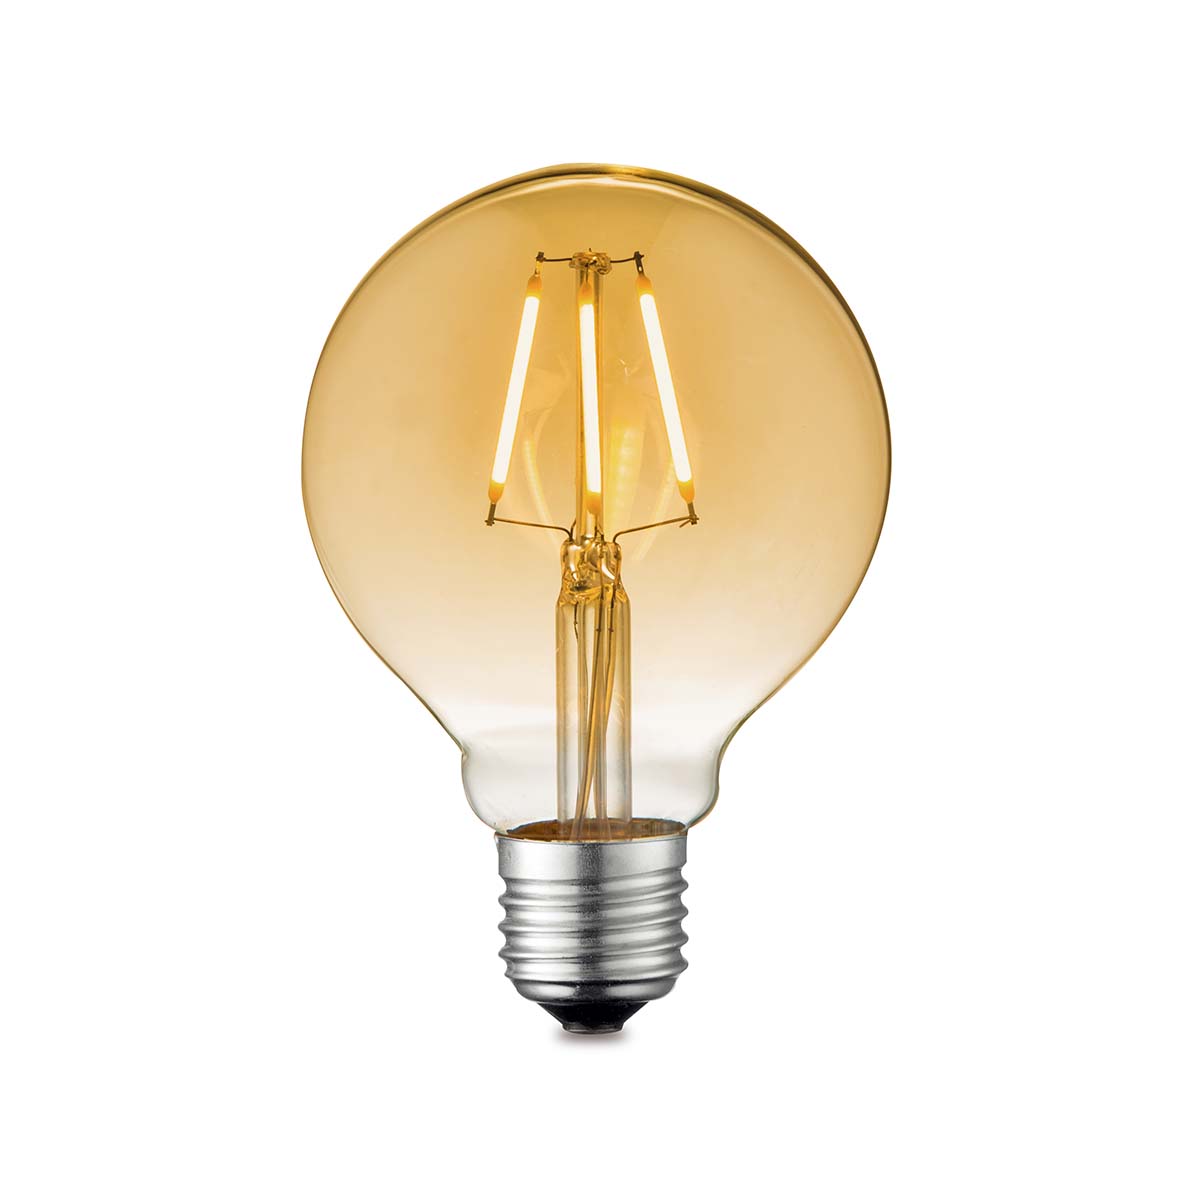 Tangla lighting - TLB-8003-06AM - LED Light Bulb Deco filament - G80 6W amber - dimmable - E27